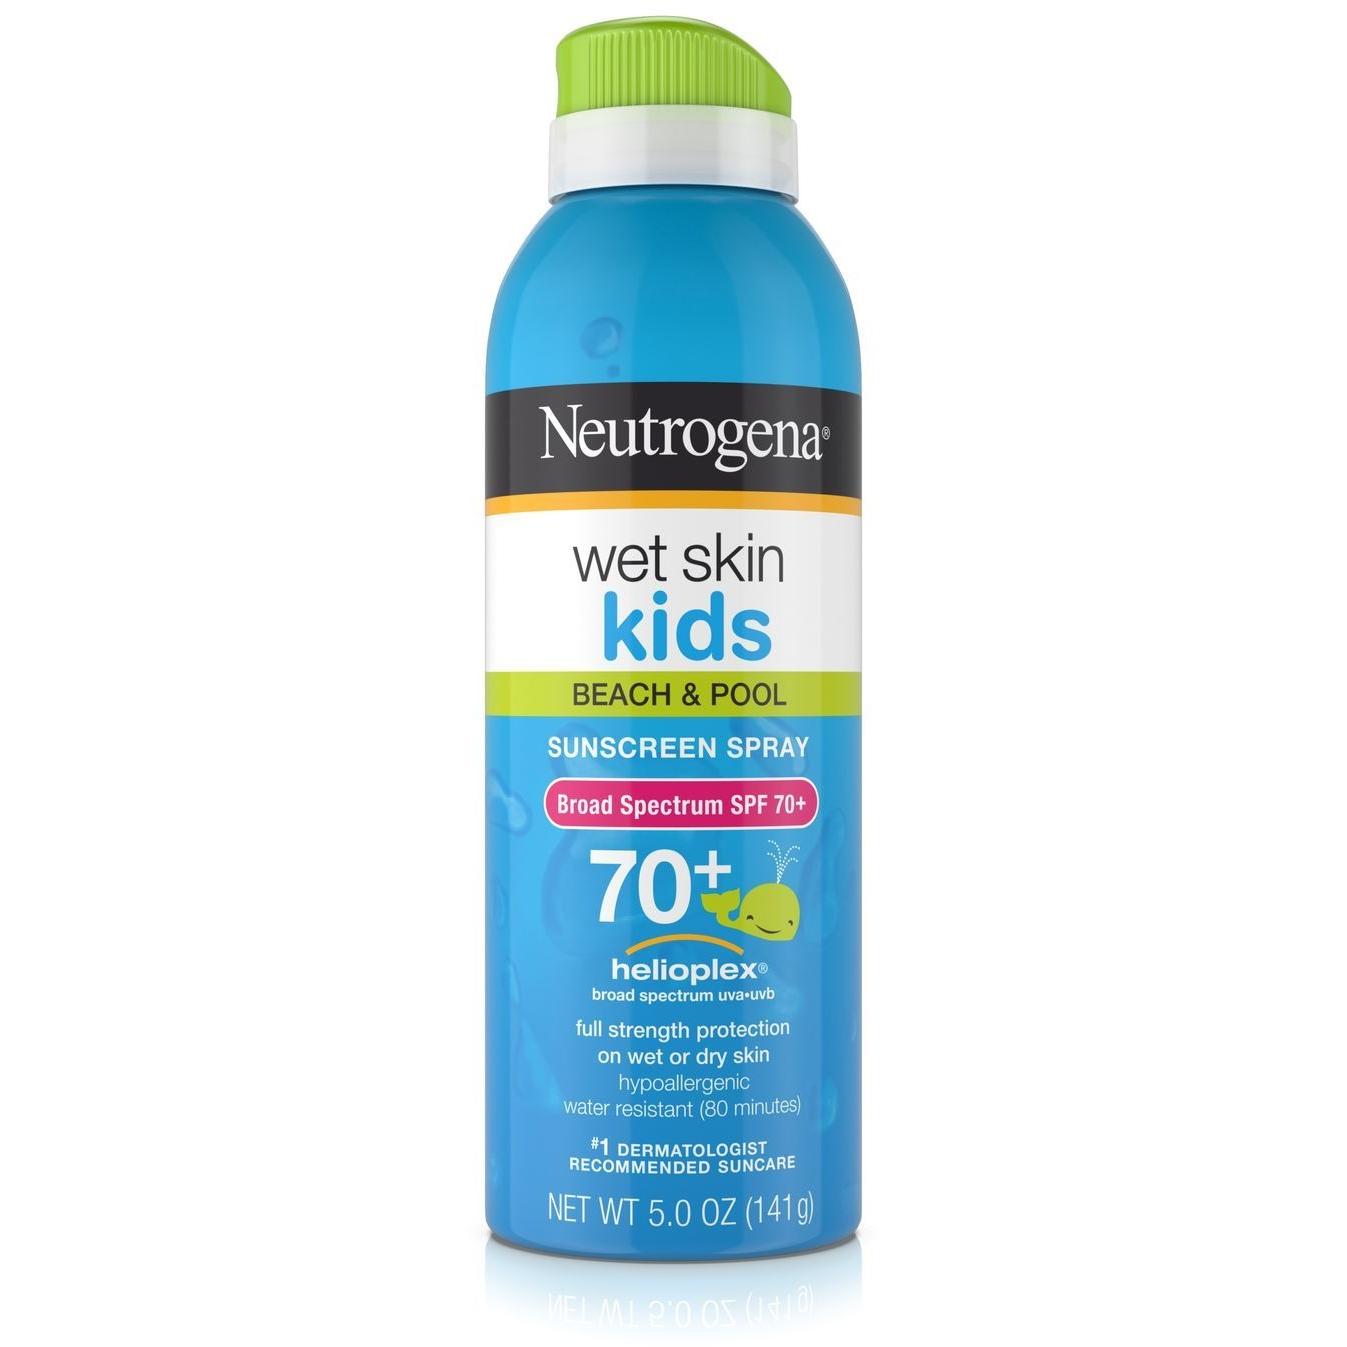 NEUTROGENA Sunscreen Spray - Wet Skin Kids SPF 70+